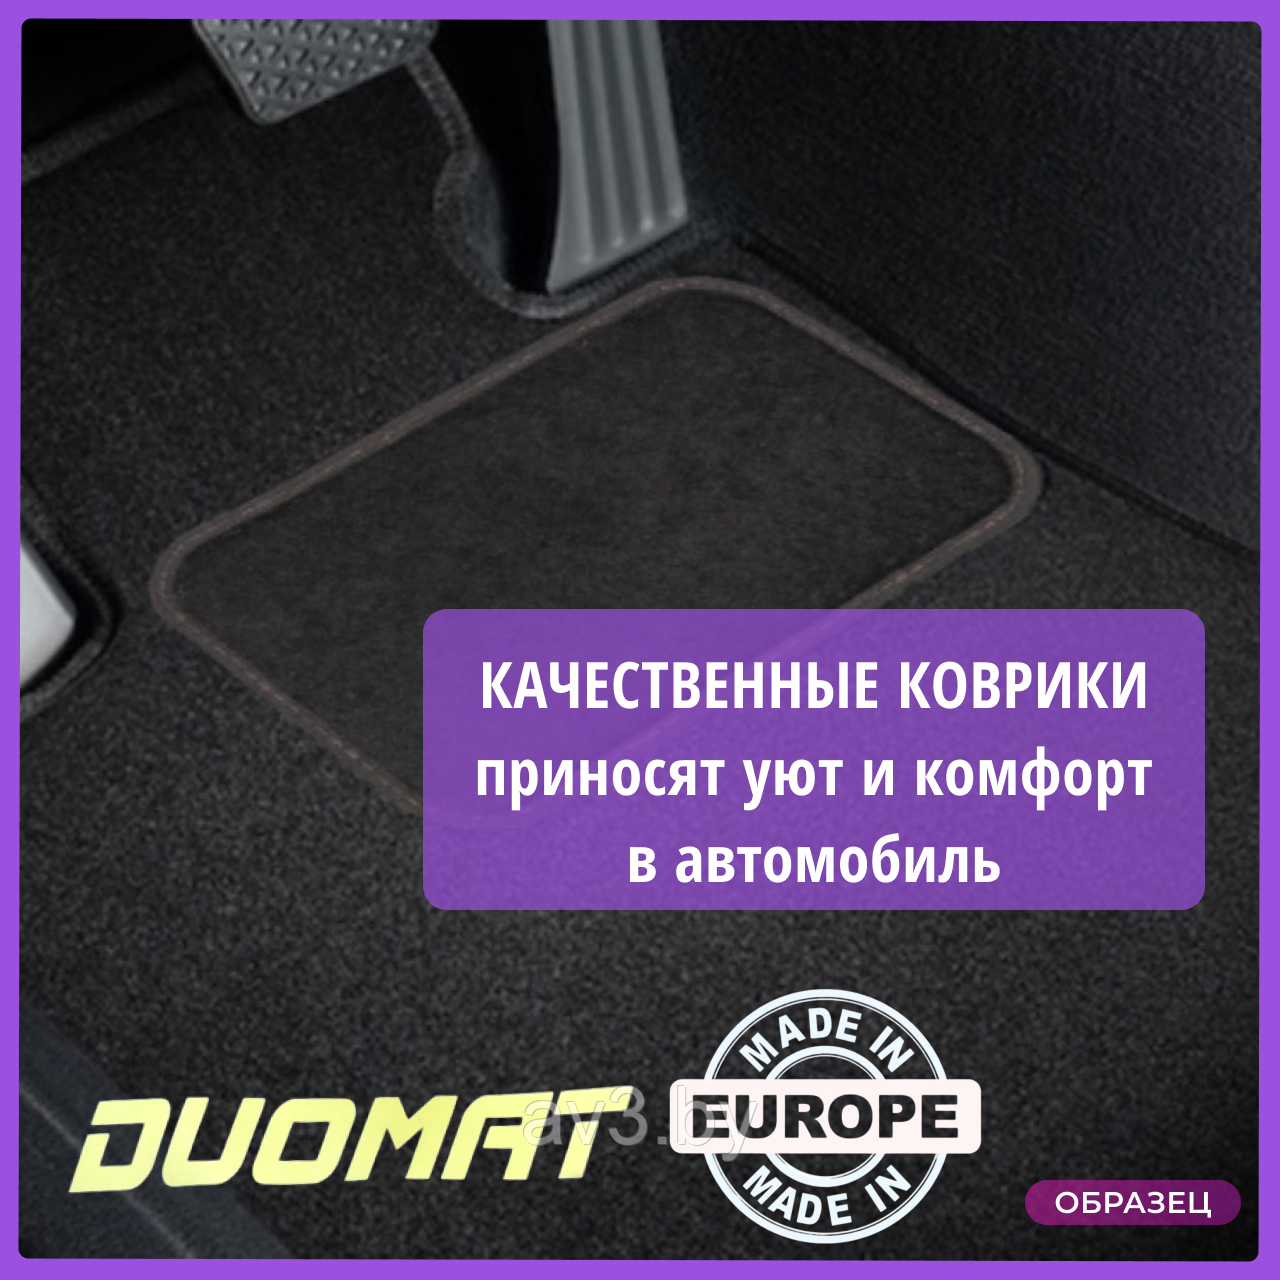 Коврики ВОРСОВЫЕ в салон Audi Q8 (18-) (Duomat)